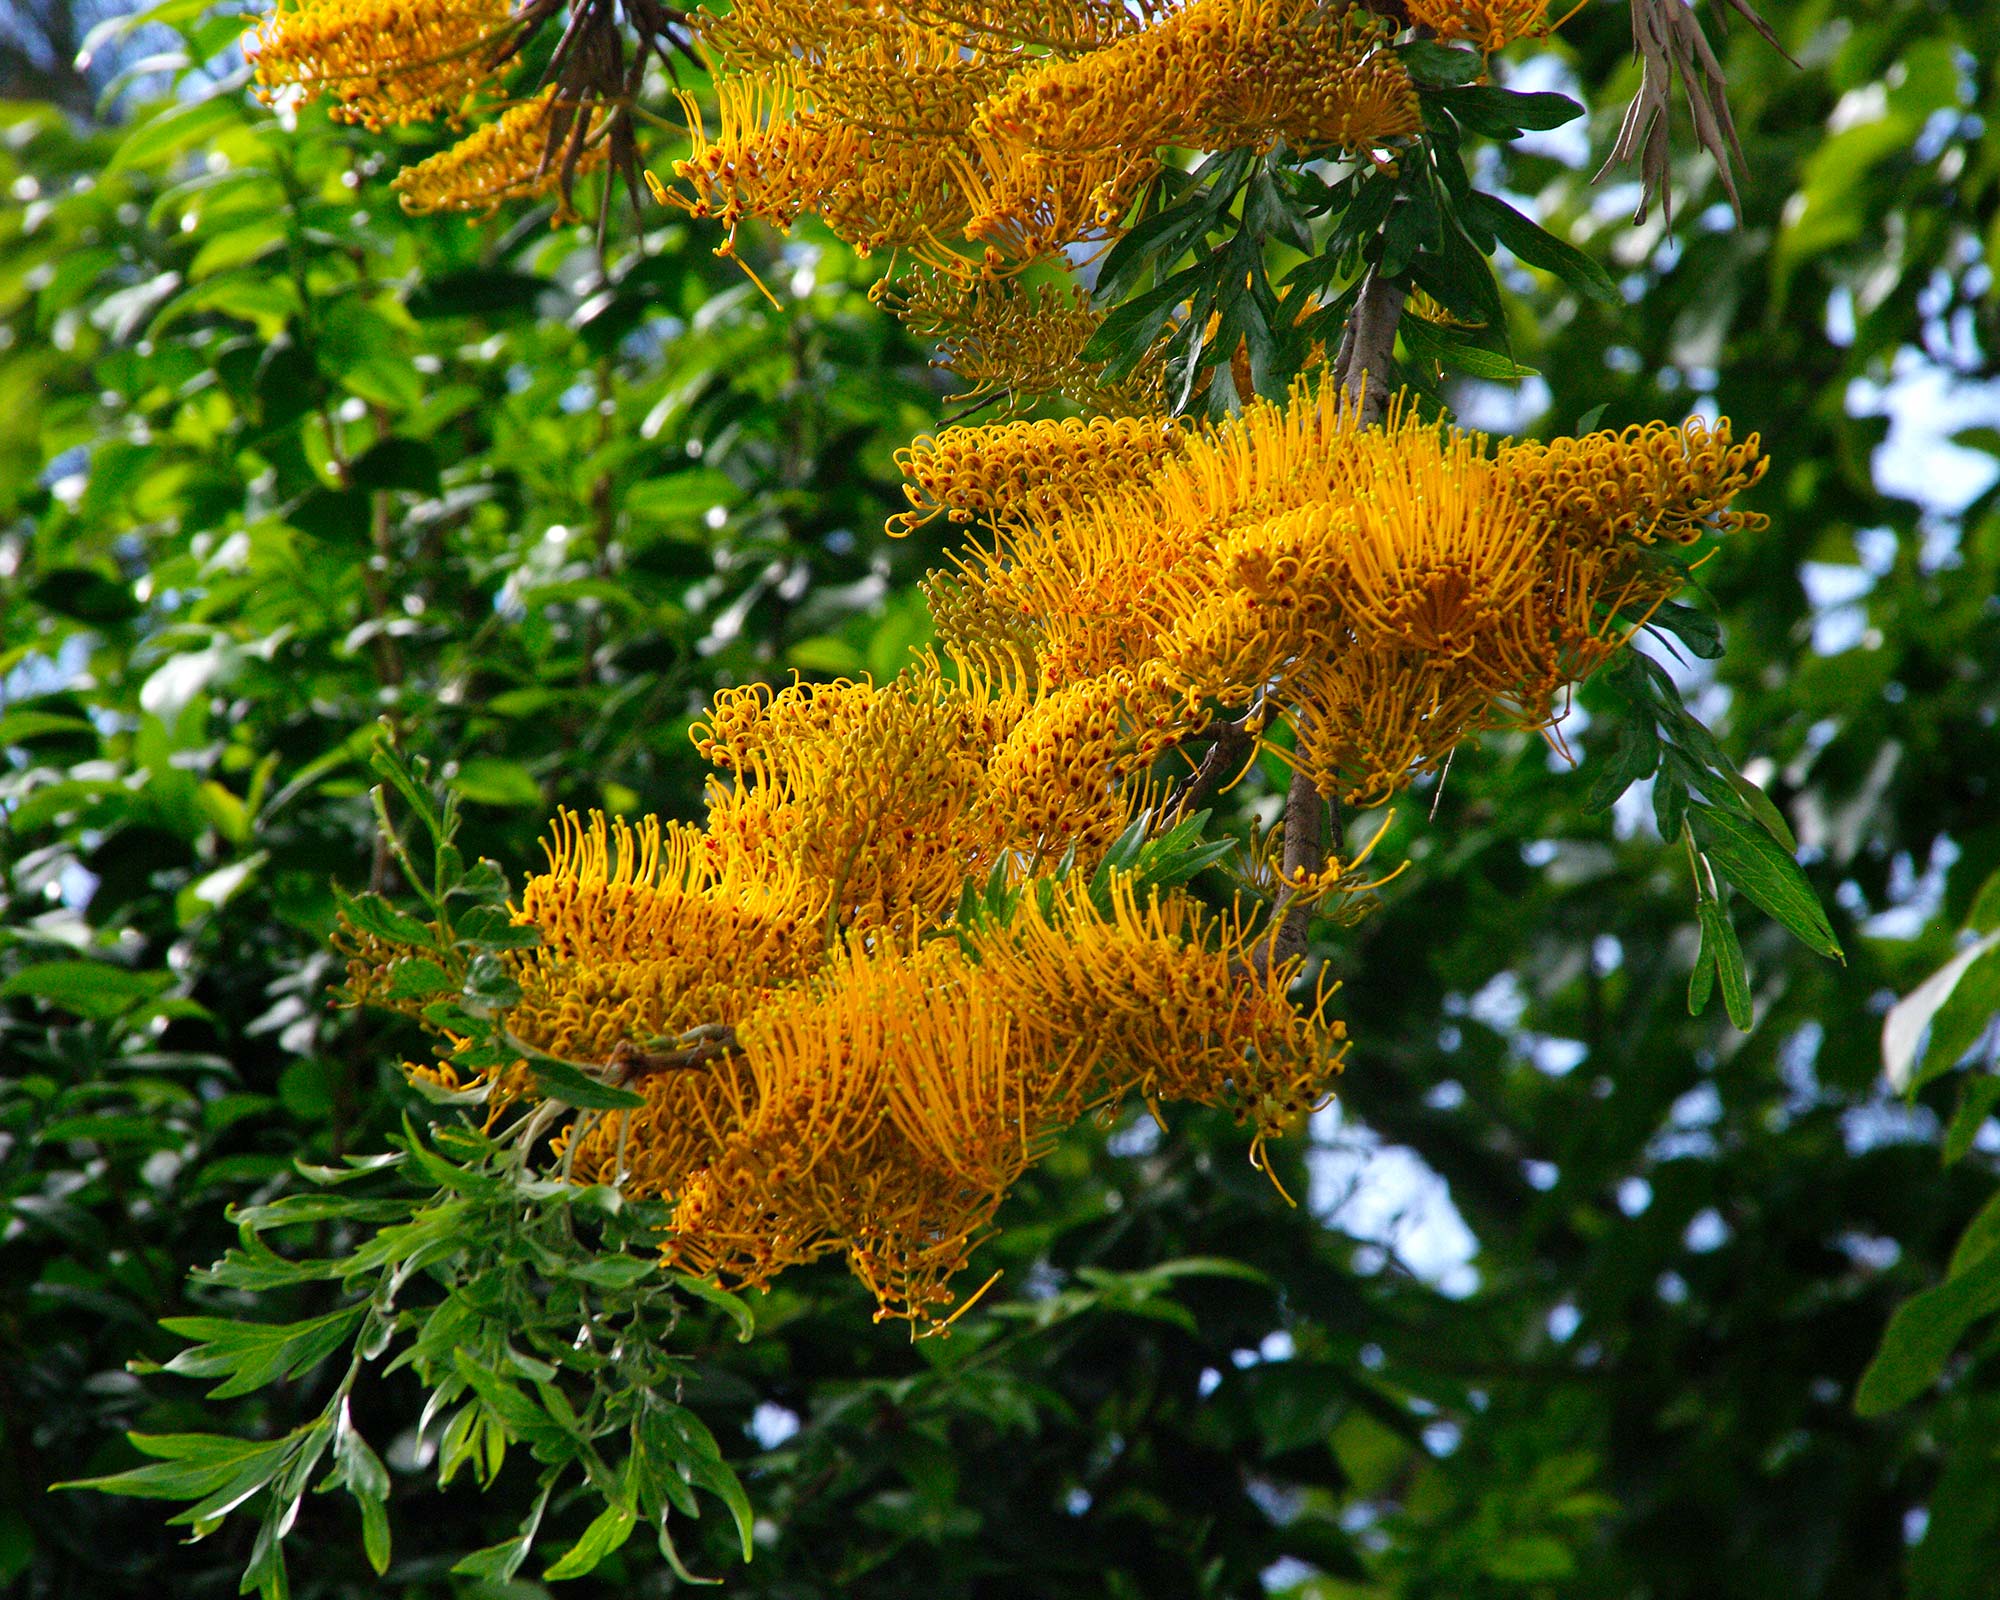 Grevillea robusta - golden toothbrush flowers of Grevillea Silky Oak